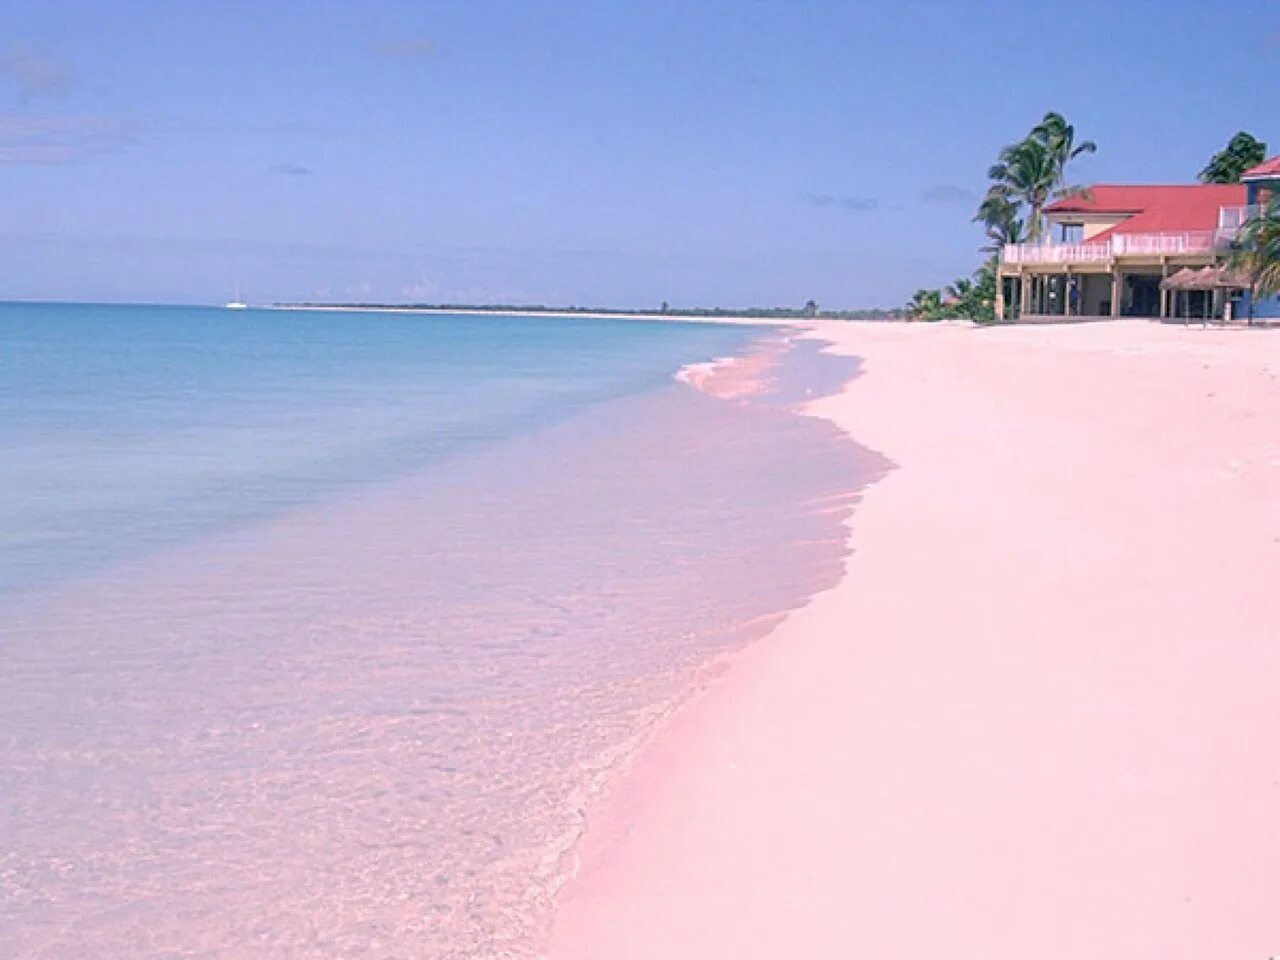 Pink Sands Beach Багамские острова. Пляж Пинк Сэндс Бич Багамские острова. Розовый пляж Пинк Сэндс Бич, Багамские острова. Розовый пляж. Остров Харбор, Багамы. Harbor island